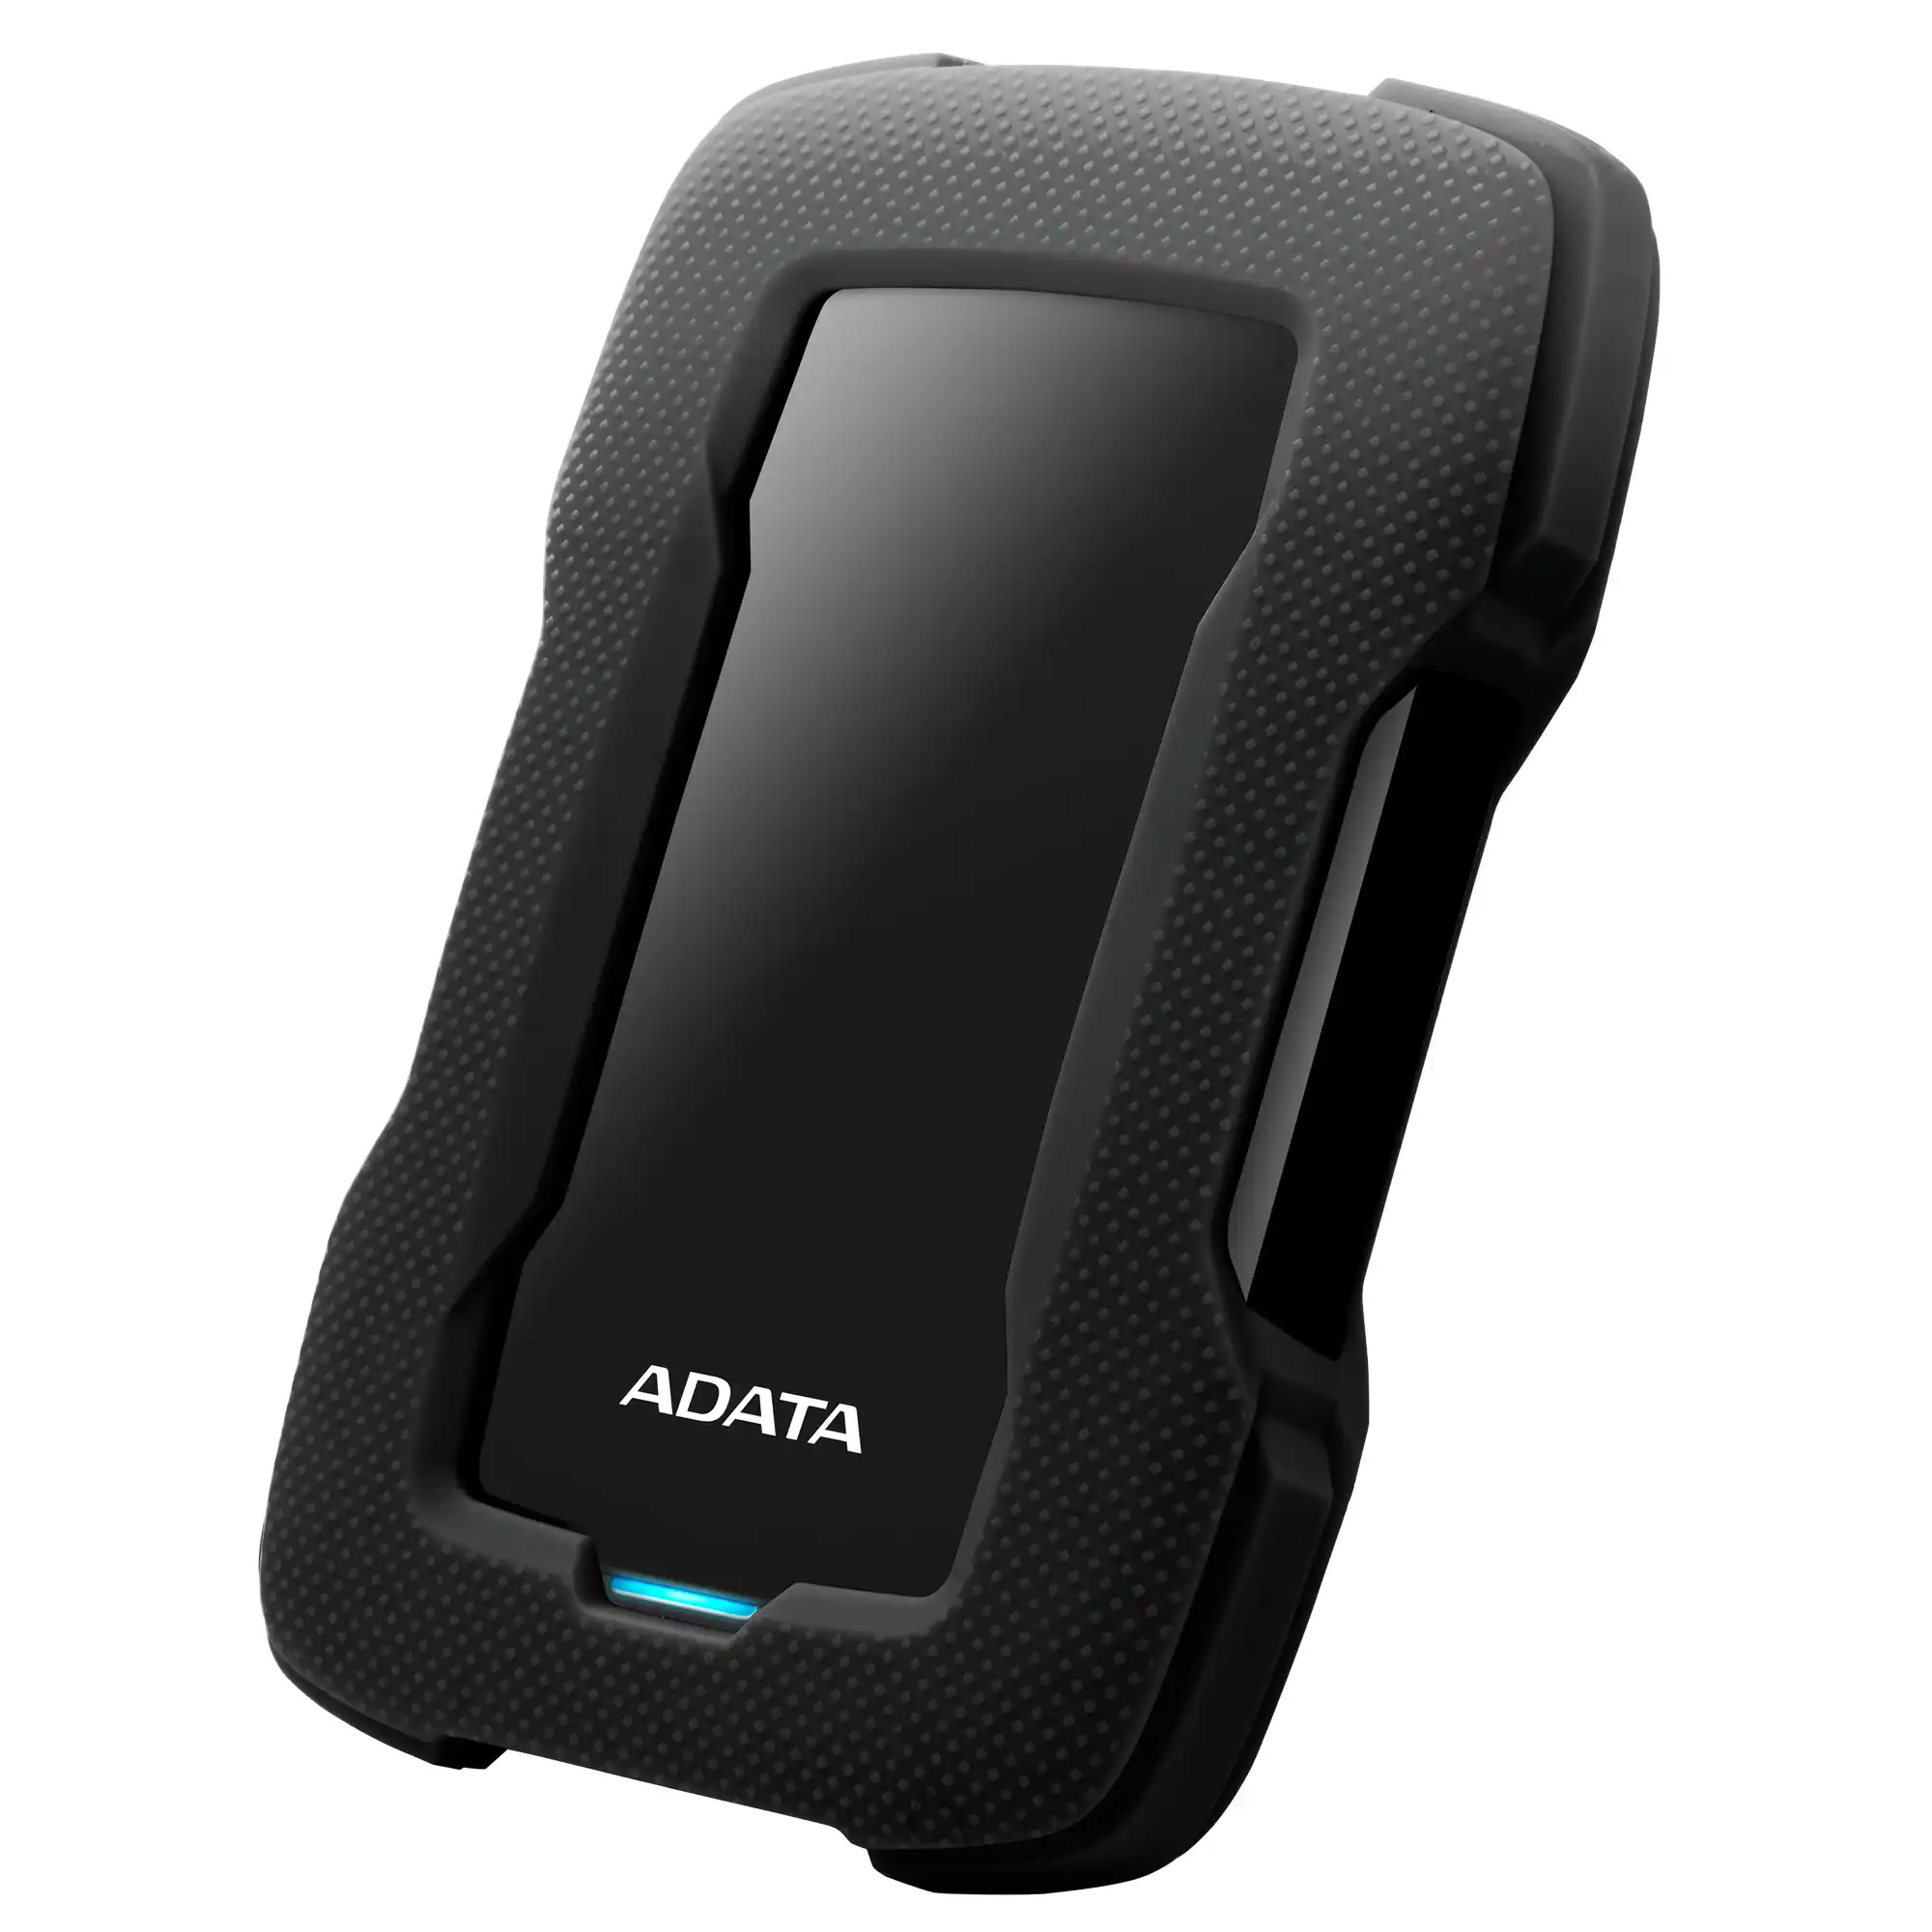 Внешний HDD диск ADATA DashDrive HD330 5TB Black (AHD330-5TU31-CBK)